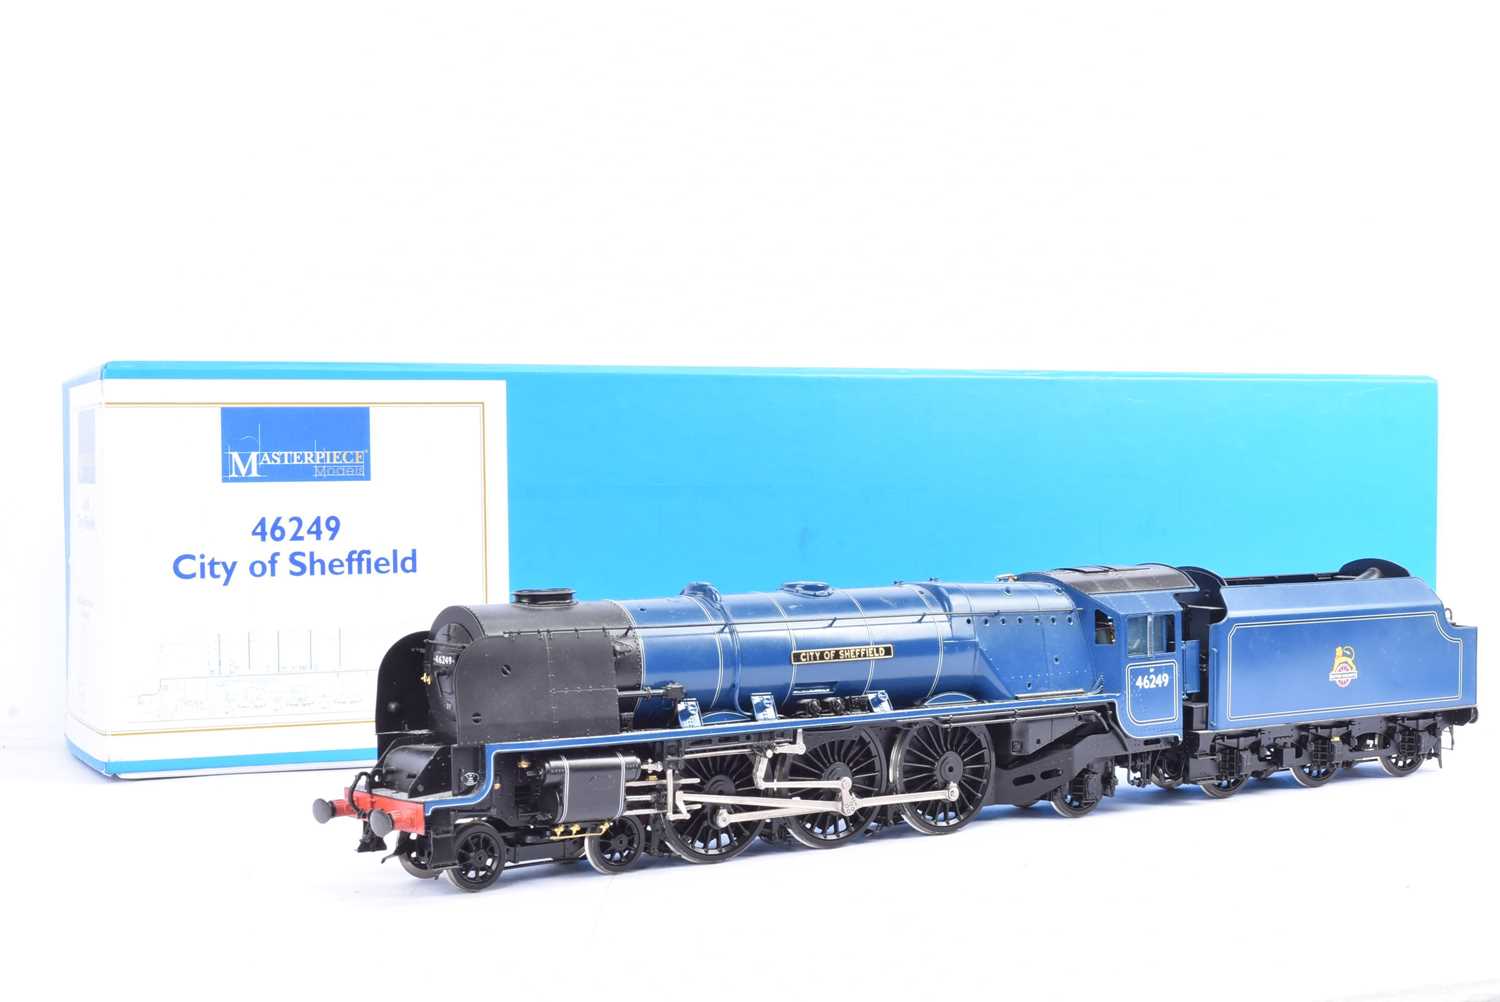 Lot 560 - Masterpiece Models 0 Gauge BR blue 46249 'City of Sheffield' Locomotive and Tender